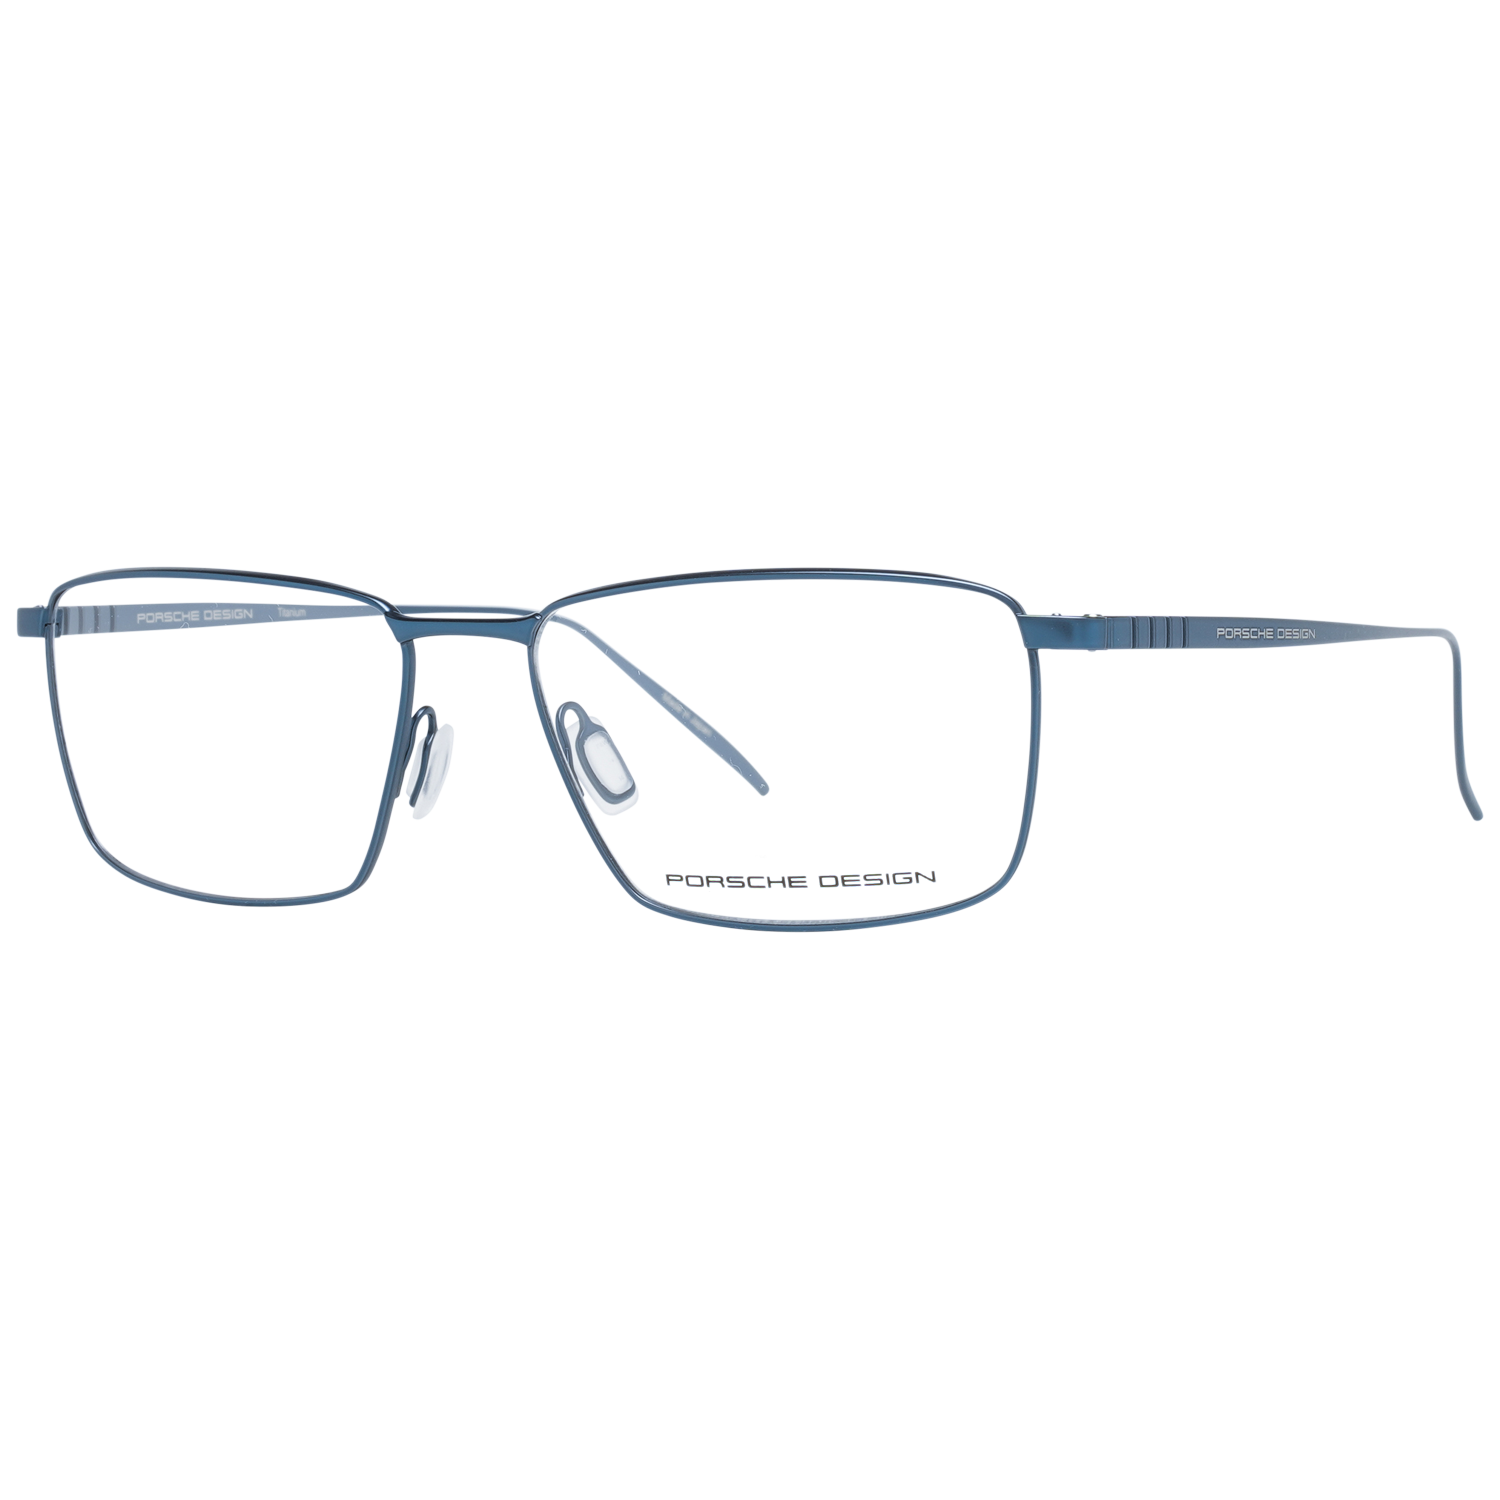 Porsche Design Men's Glasses Optical Frame Blue Rectangle P8373 D 56 ...